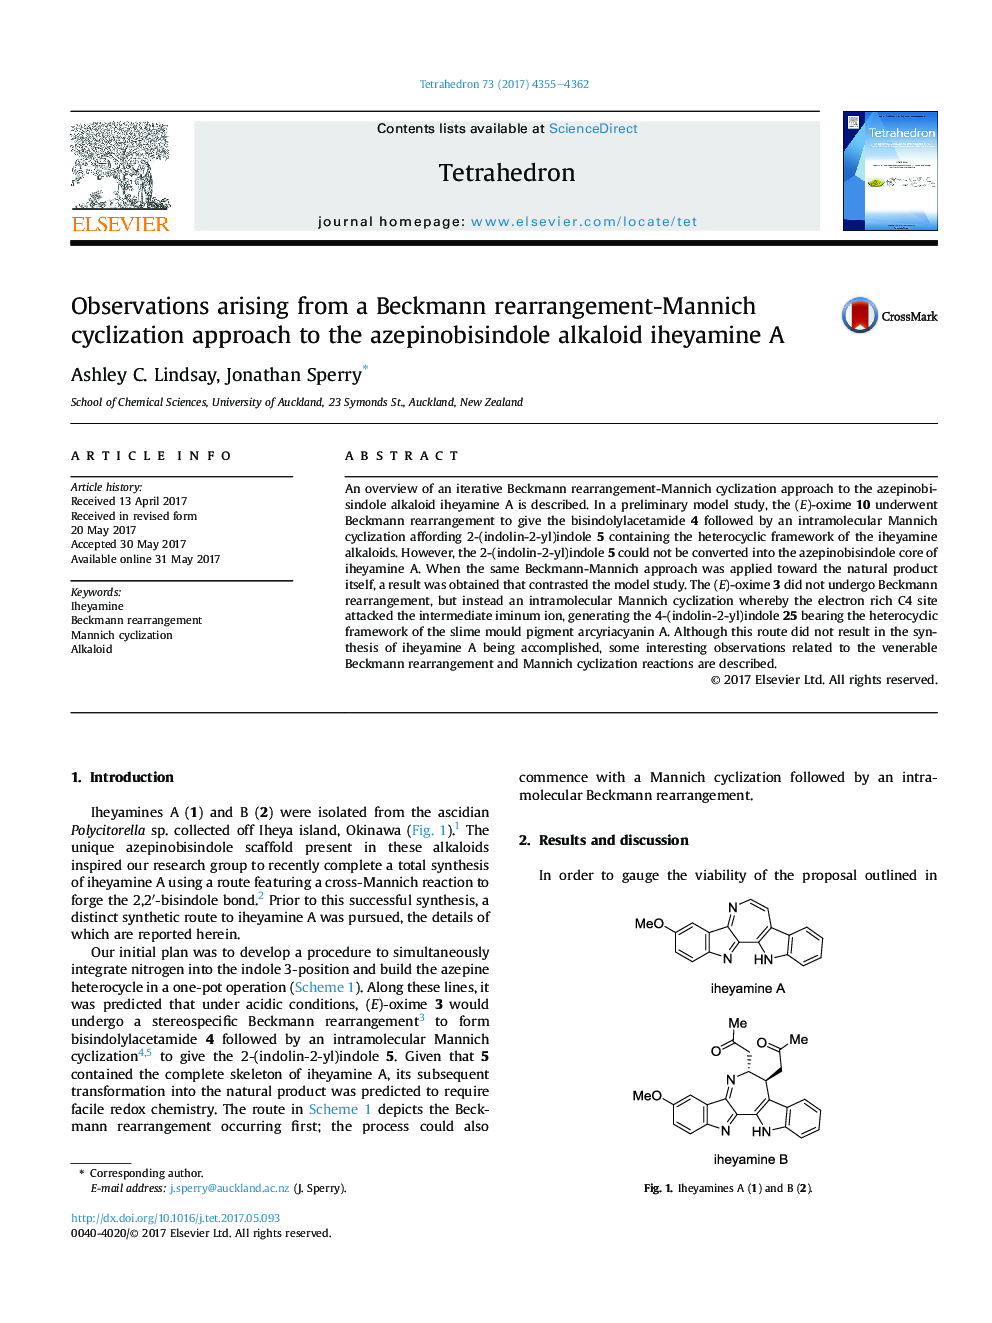 Observations arising from a Beckmann rearrangement-Mannich cyclization approach to the azepinobisindole alkaloid iheyamine A